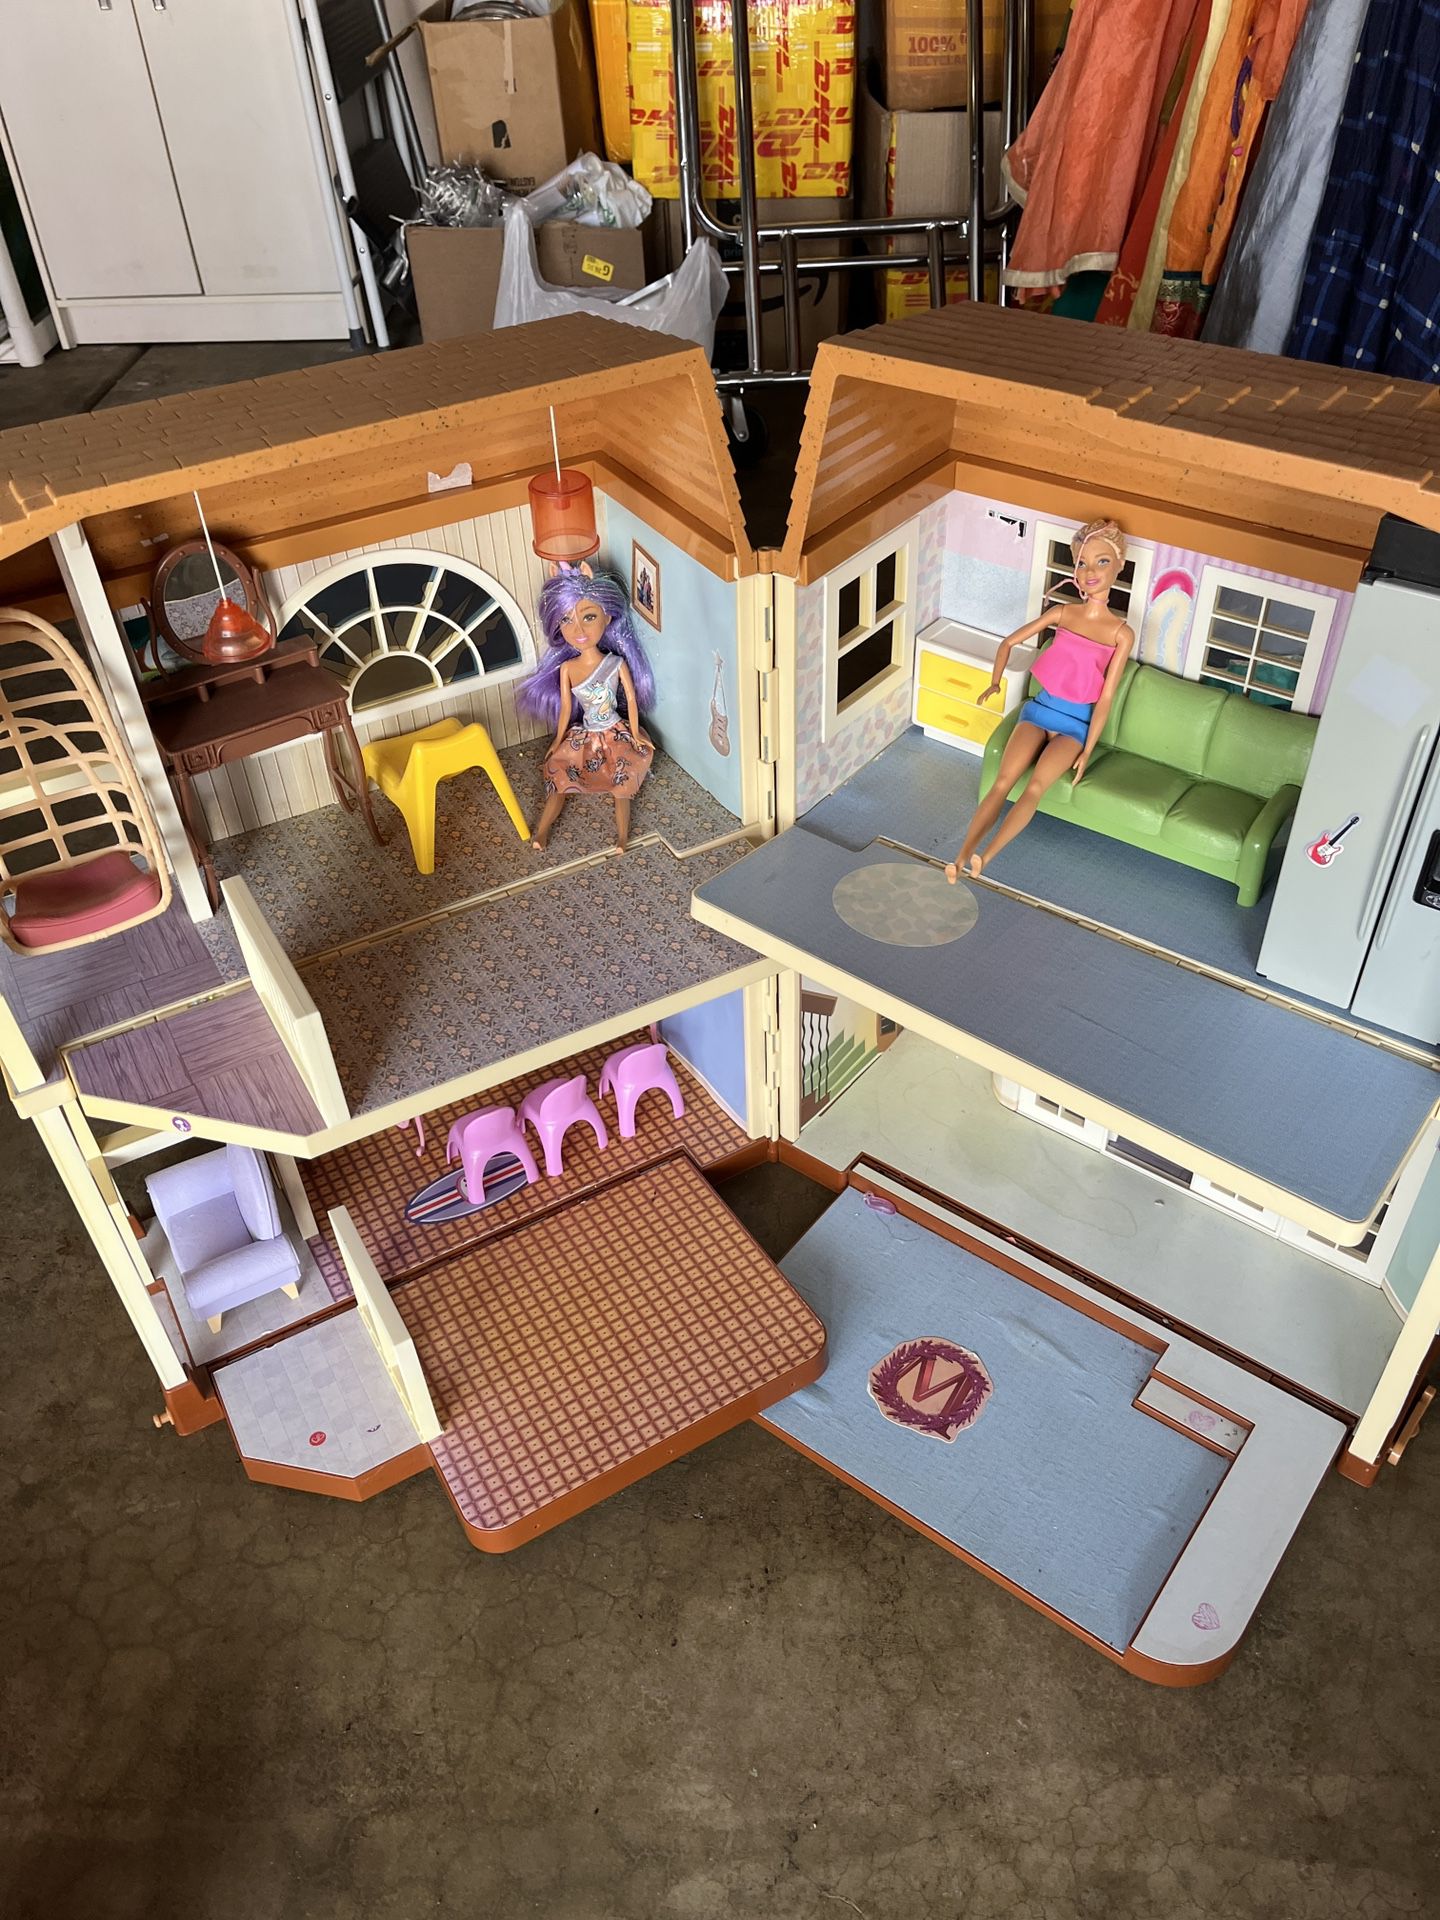 Girls Doll House For Little Kids Age 3-8